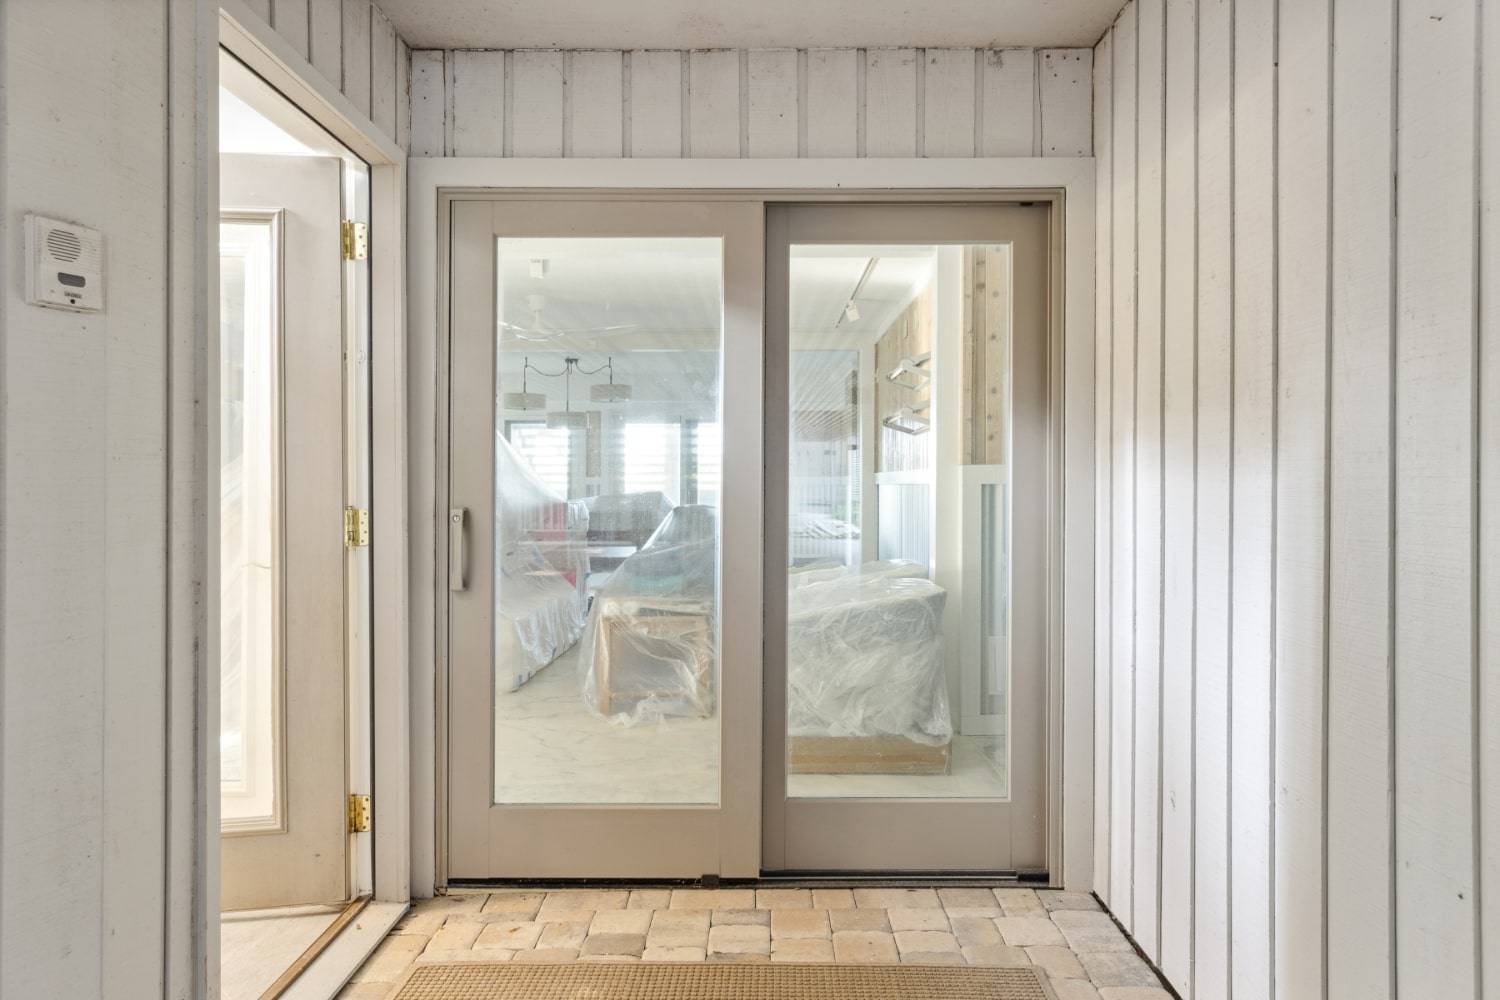 Winslow Design Studio is the Hilton Head Island leader in custom windows and doors